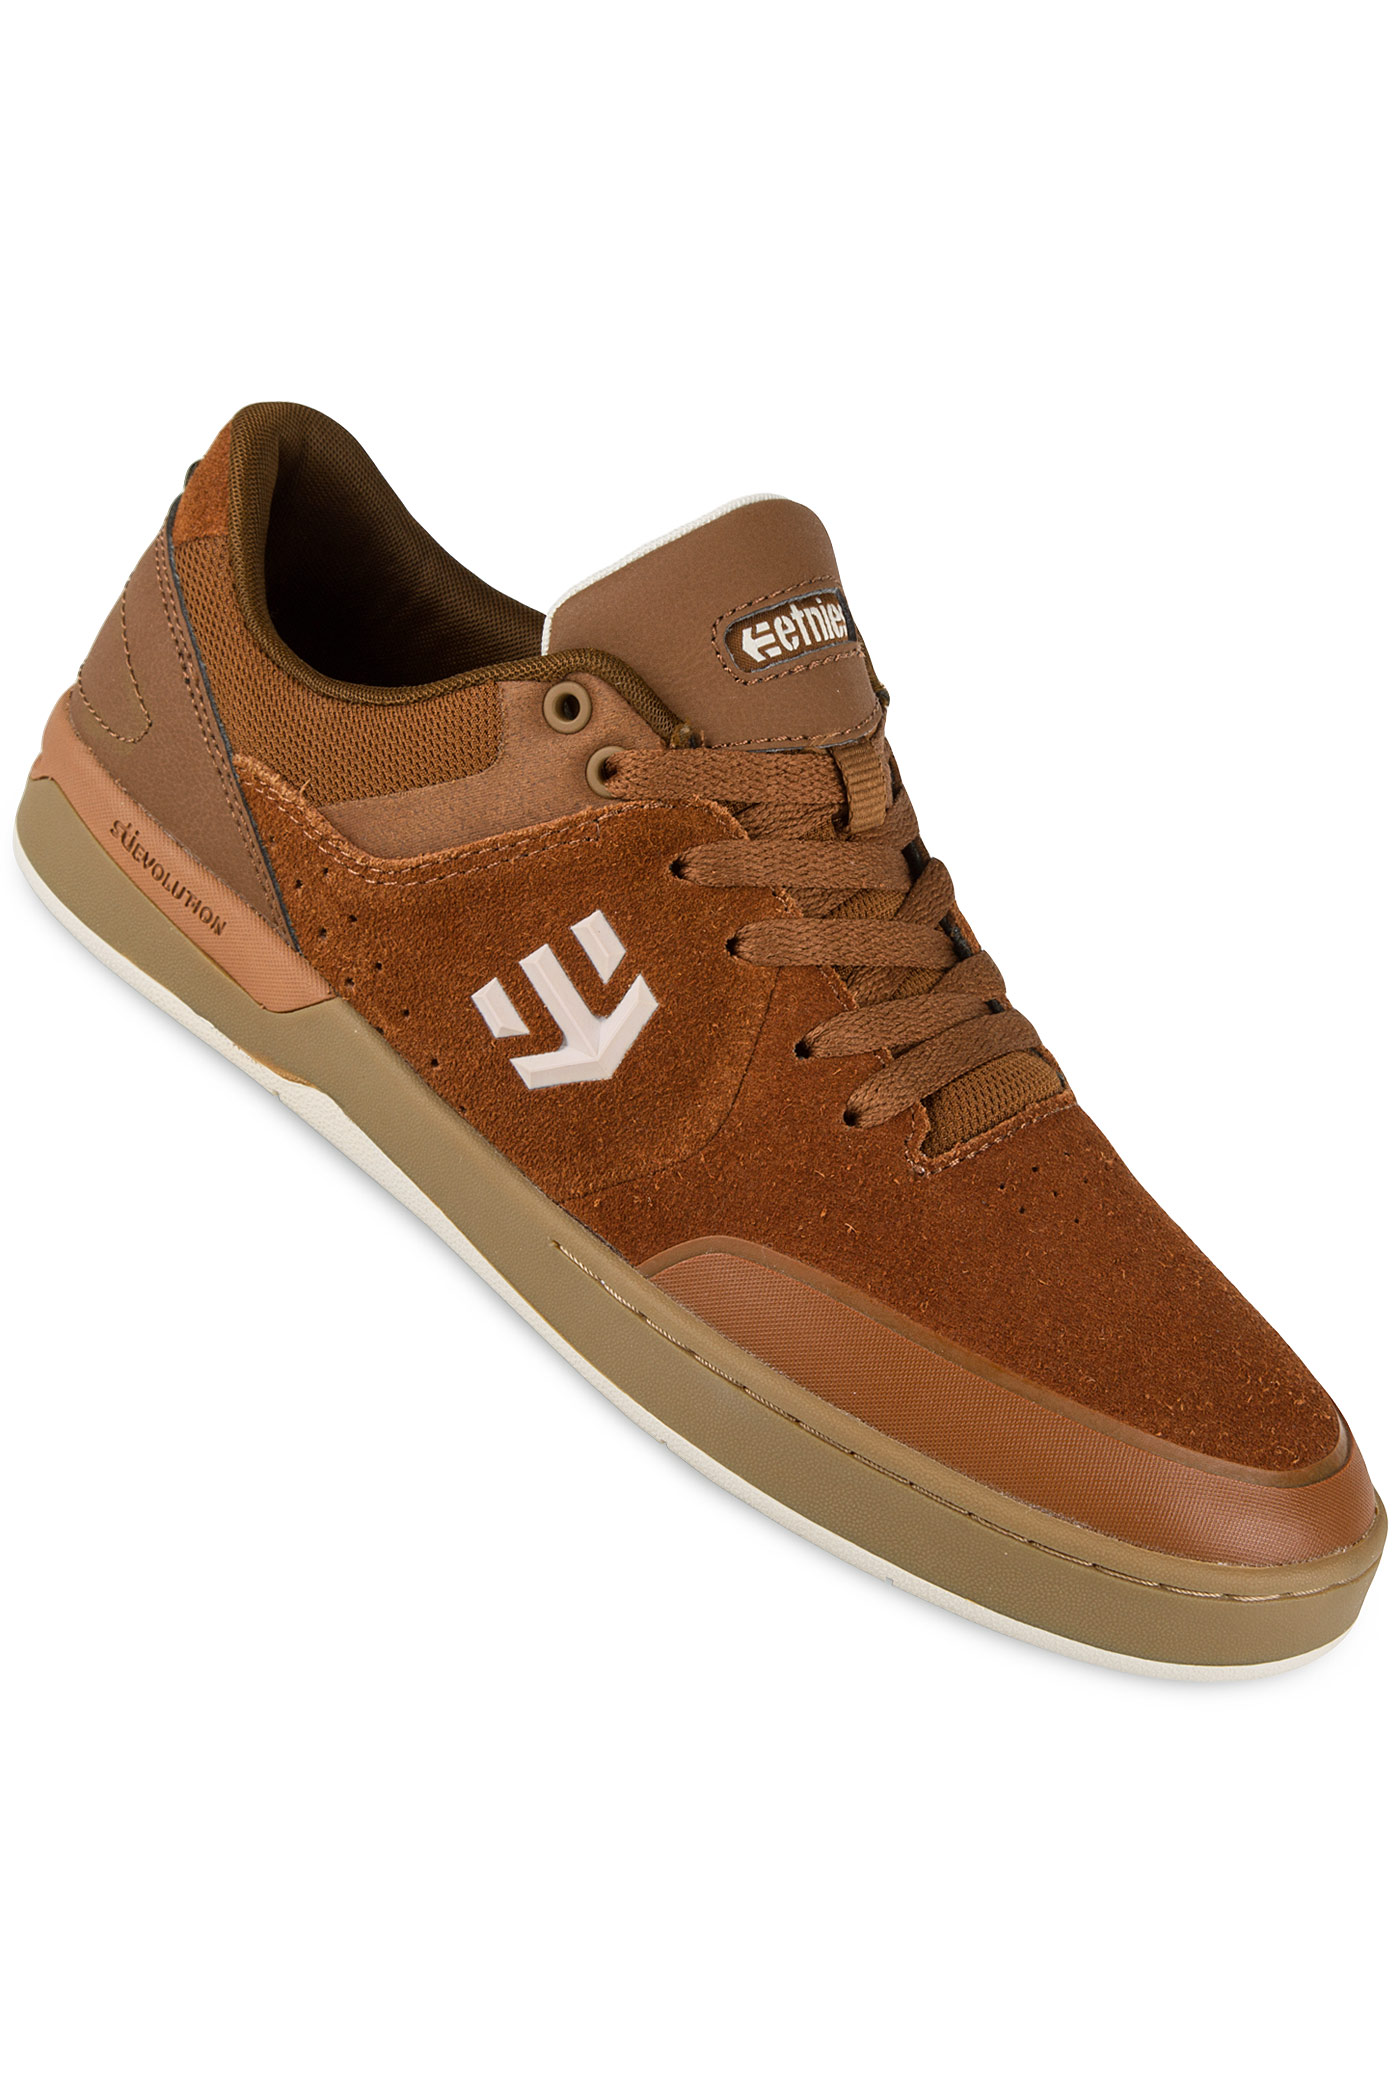 Etnies Marana XT Shoe (brown) buy at skatedeluxe